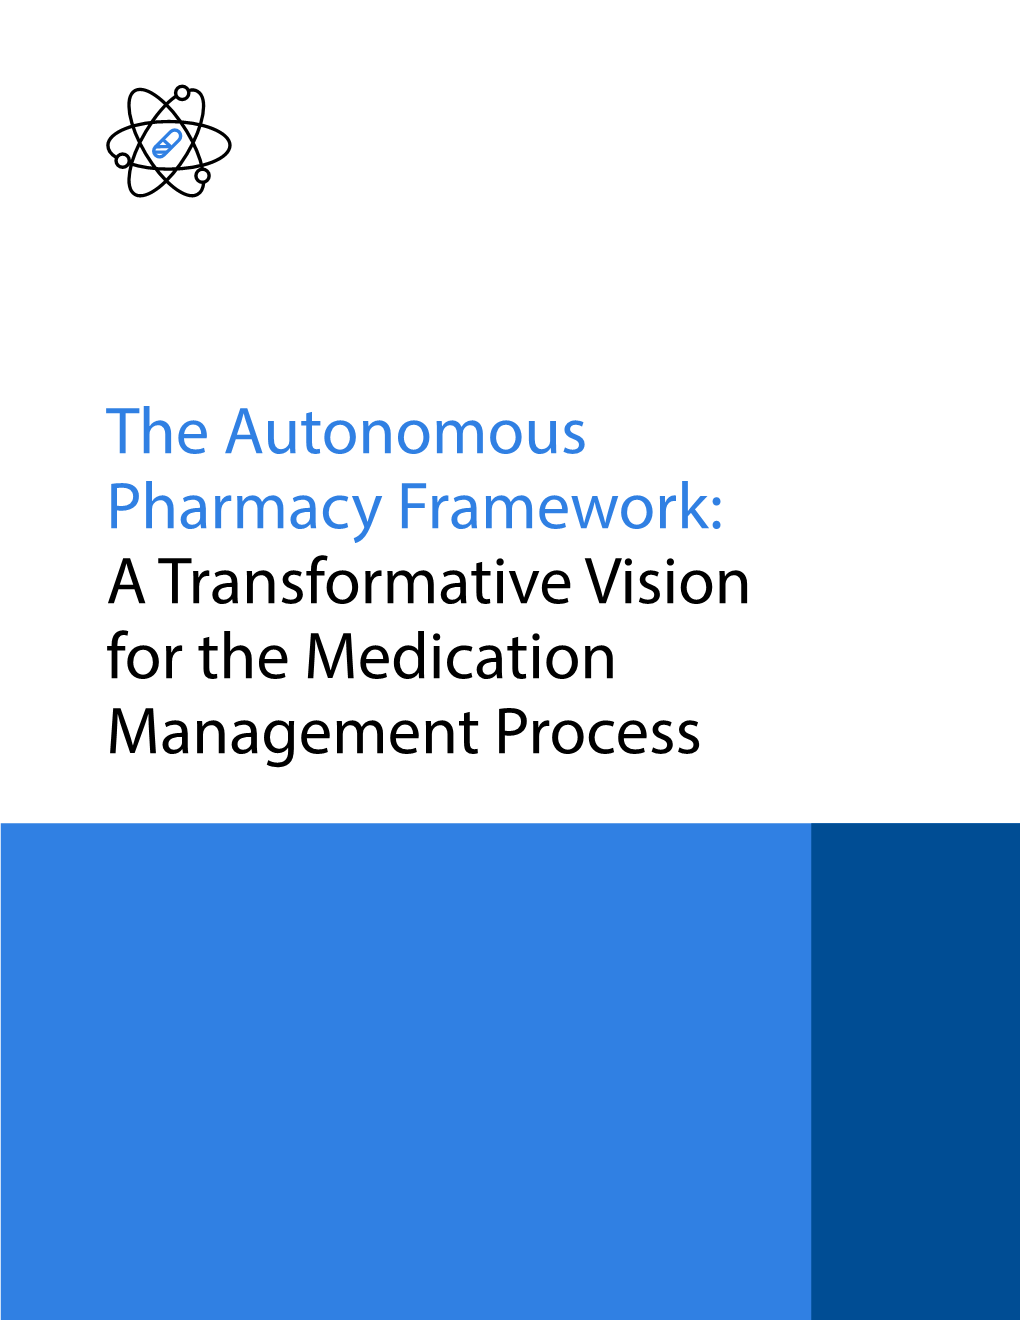 The Autonomous Pharmacy Framework: a Transformative Vision for the Medication Management Process